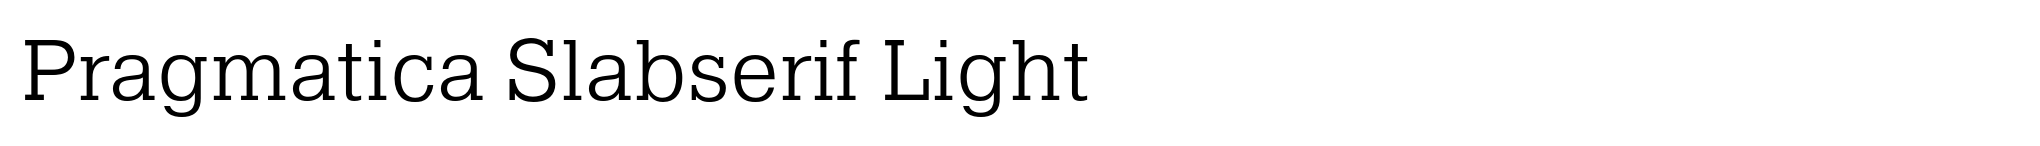 Pragmatica Slabserif Light image